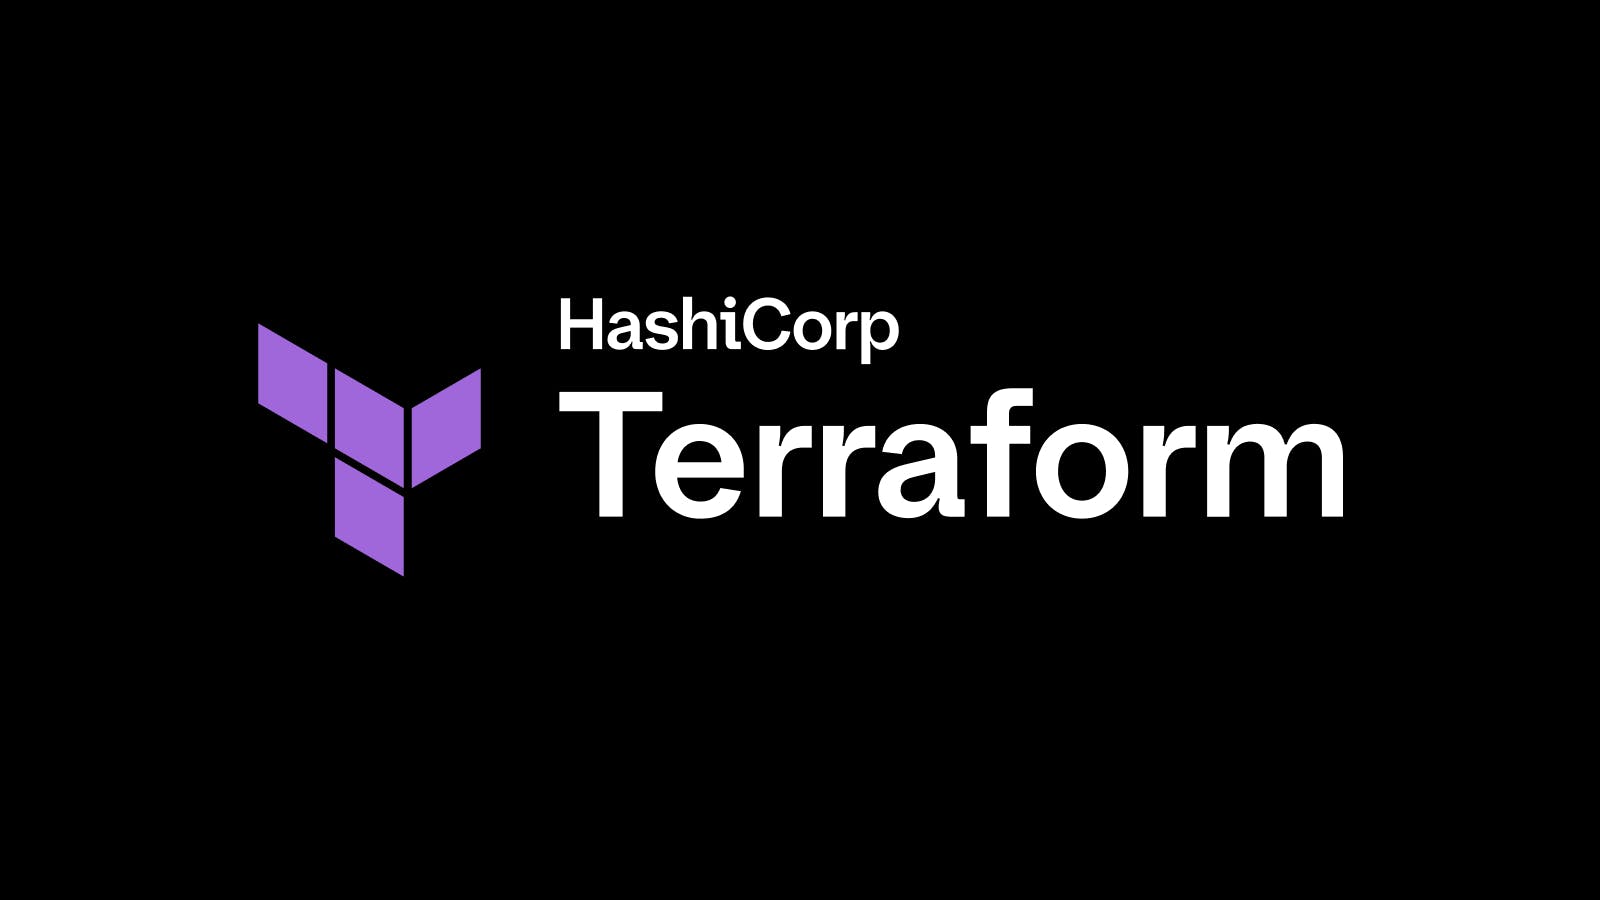 Terraform Enterprise adds Podman support and workflow enhancements